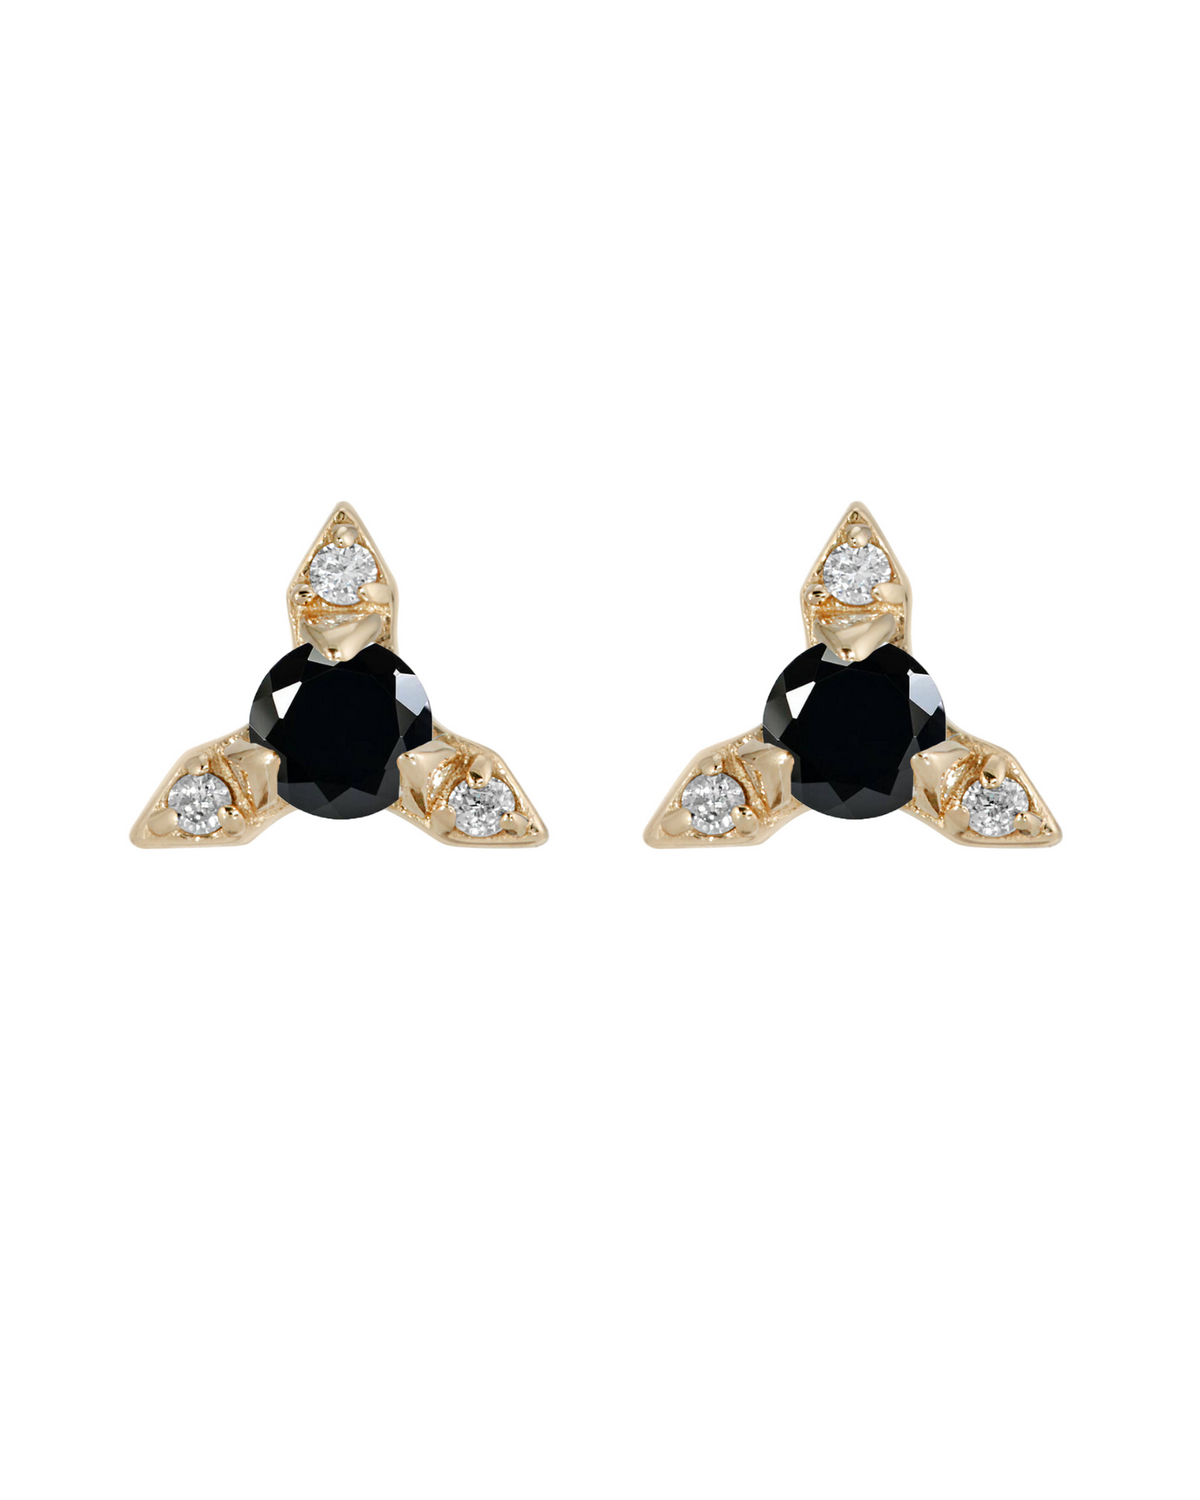 Onyx and Diamond Stud Earrings 14k gold